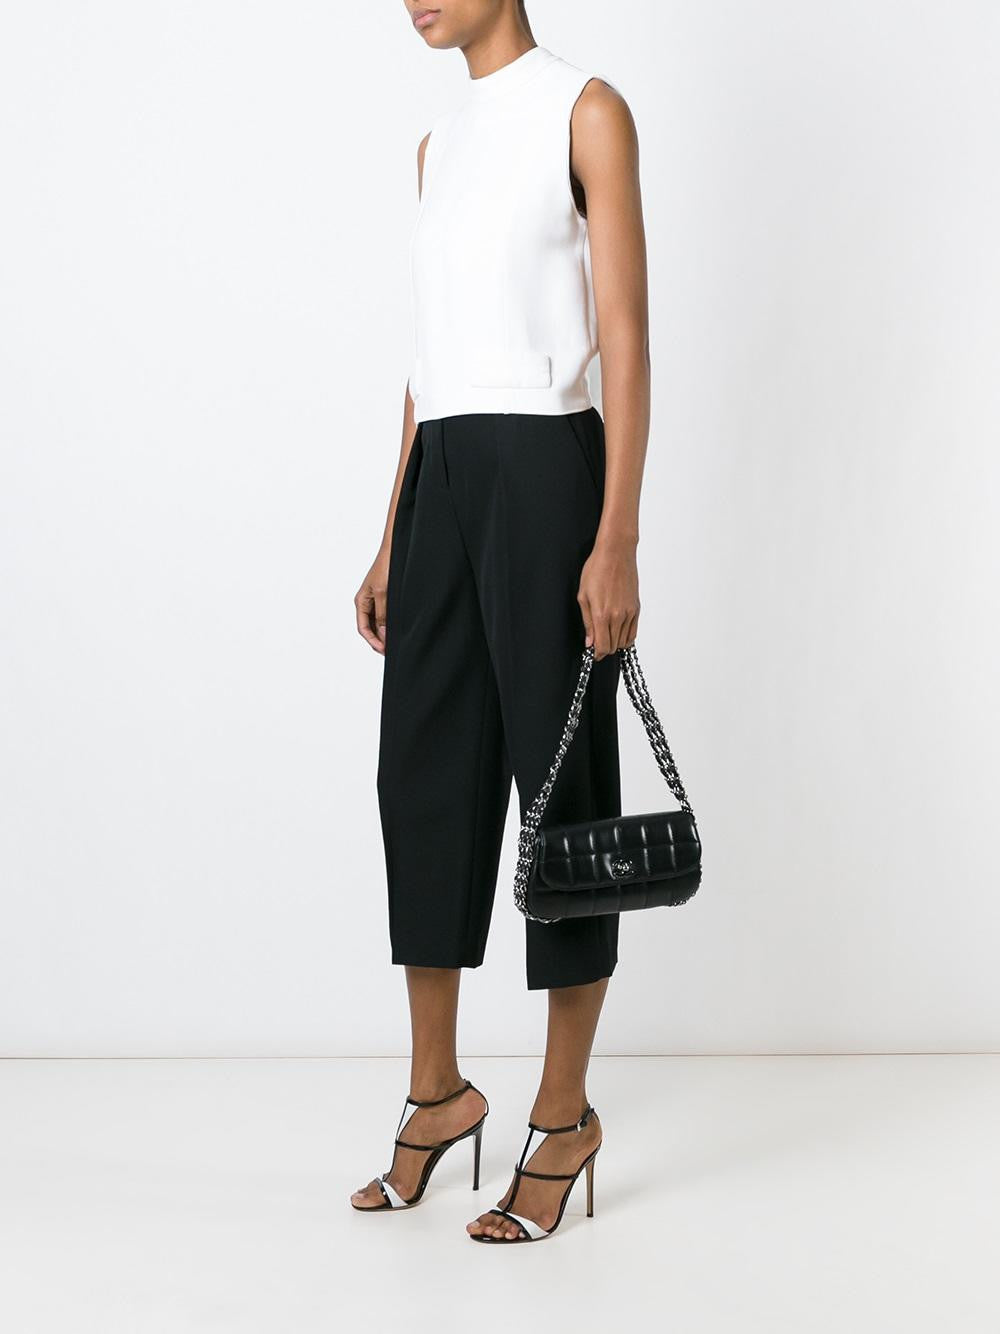 Shop authentic Chanel Multiple Chain Shoulder Bag at revogue for just ...